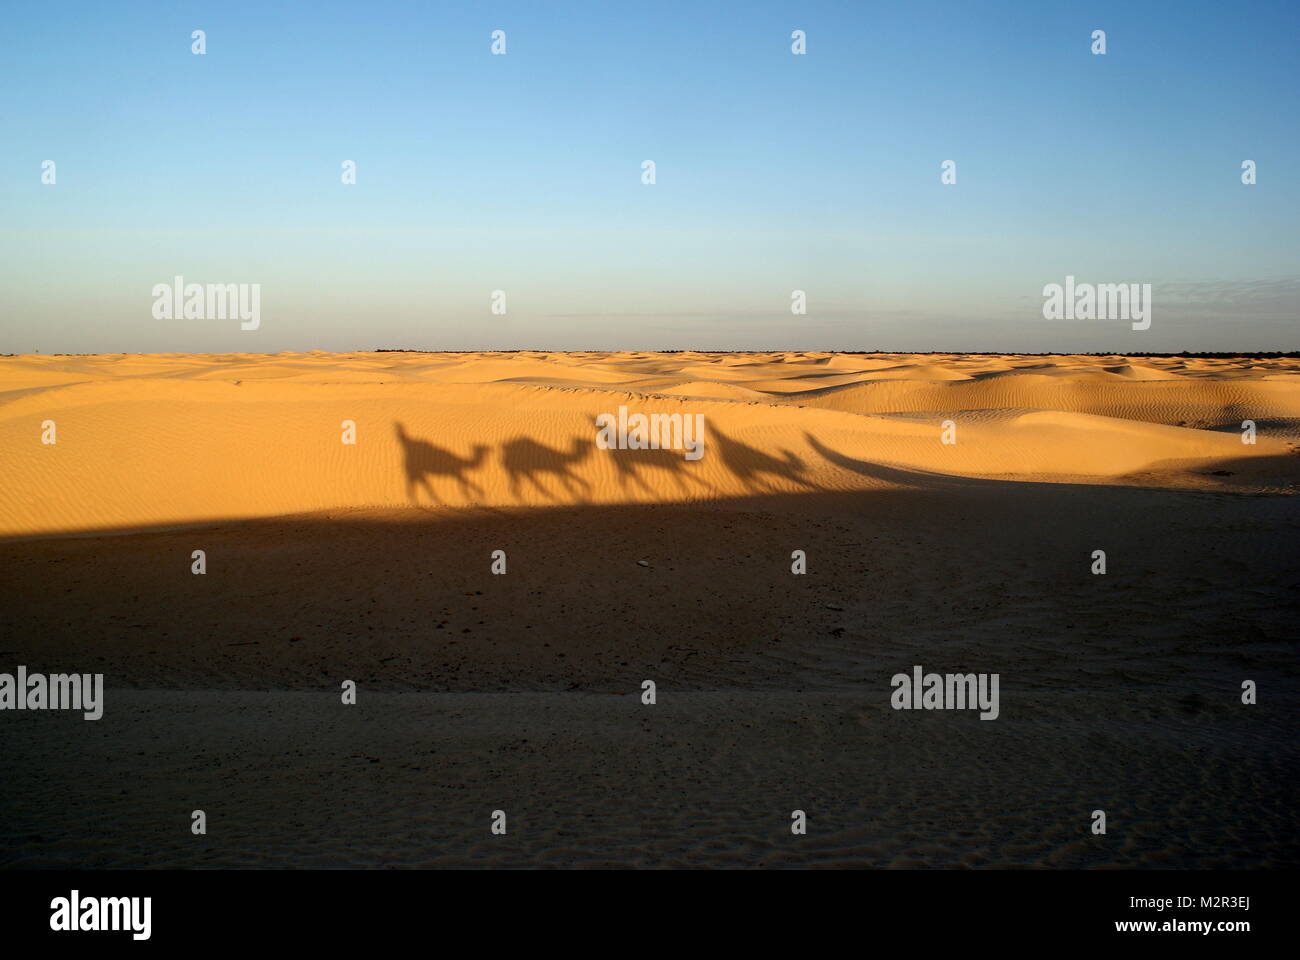 Shadows on the sand dunes of camels trekking in the Sahara desert near Douz, Tunisia Stock Photo